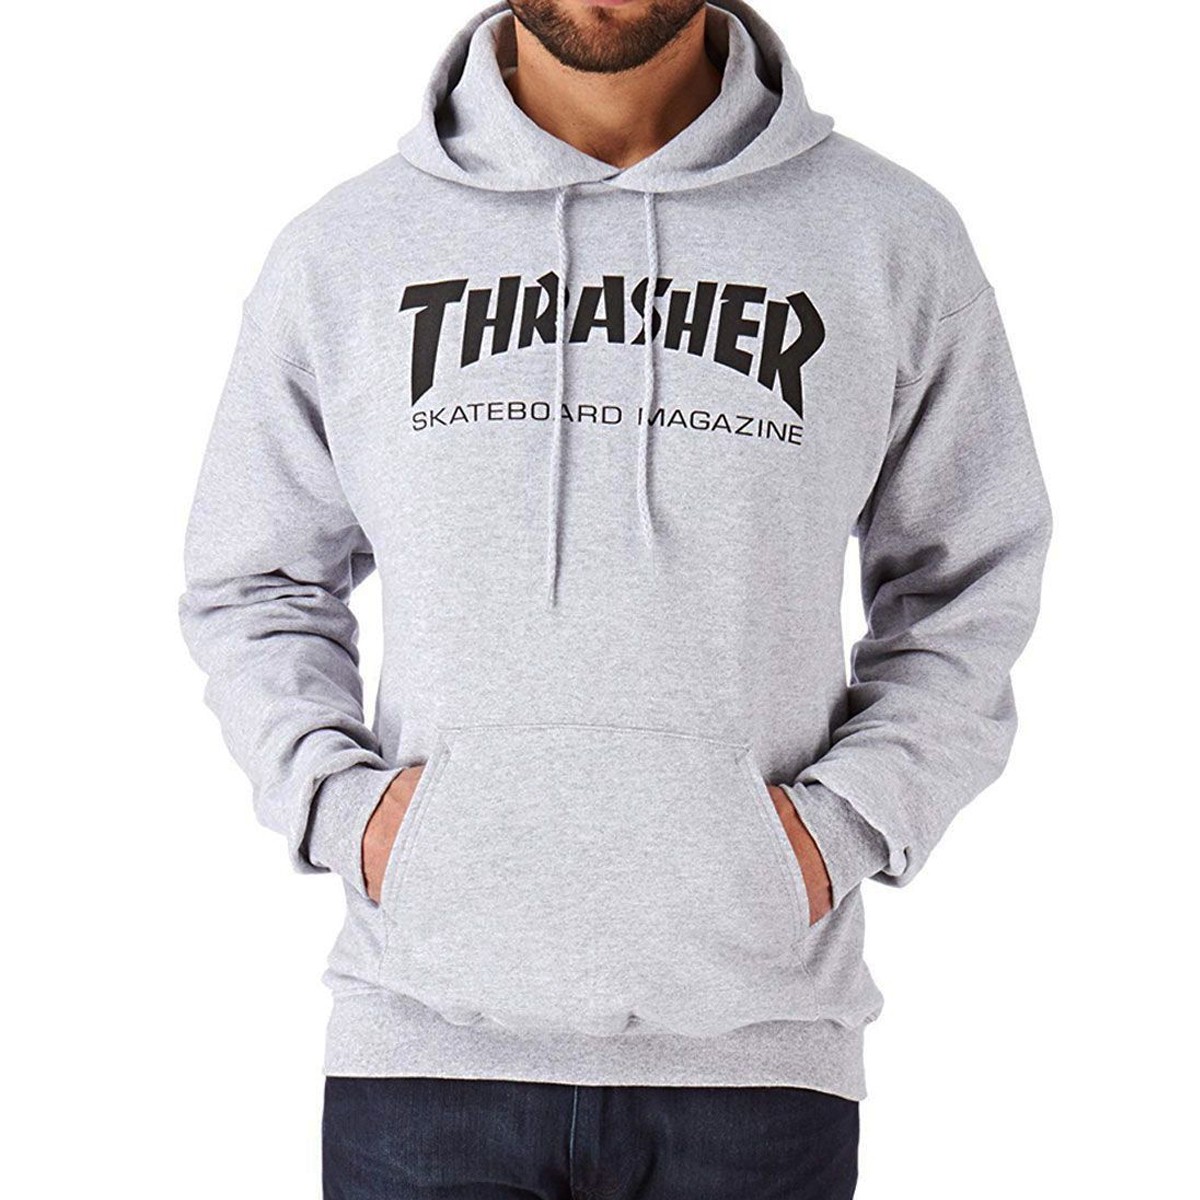 Thrasher Skate Mag Greymotled Hoodie Sweatshirt 113103